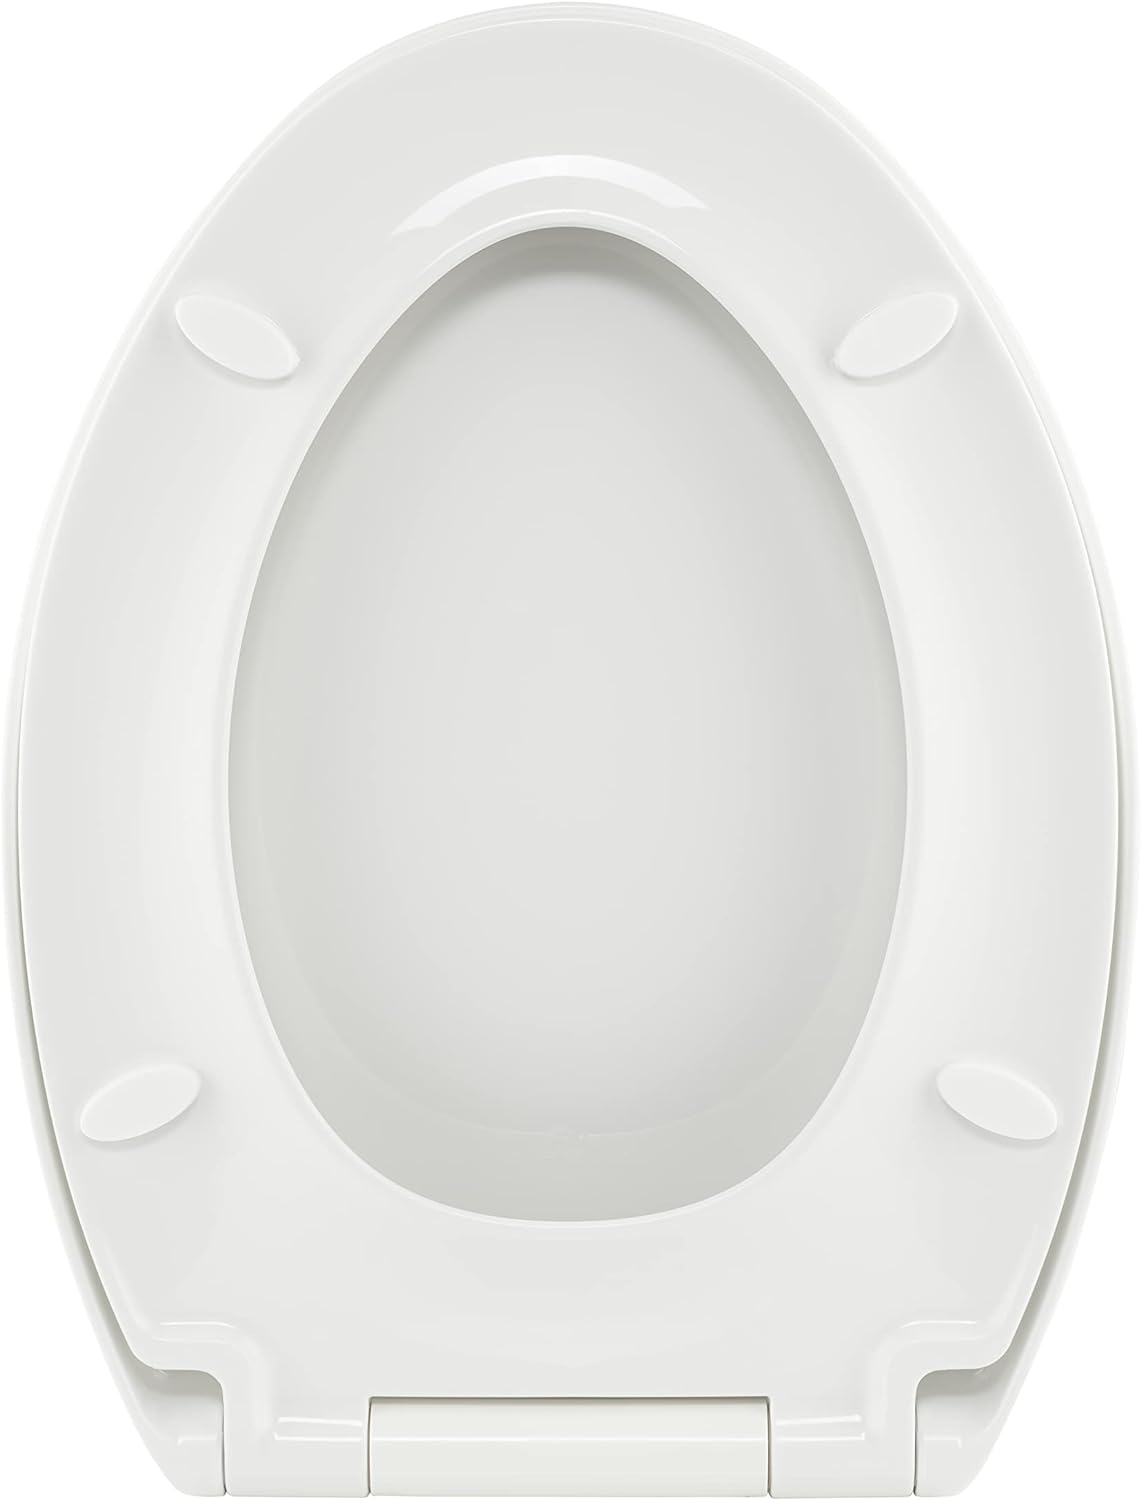 BATH ROYALE BR606-00 Premium Elongated Toilet Seat, White, High Quality Polypropylene Material